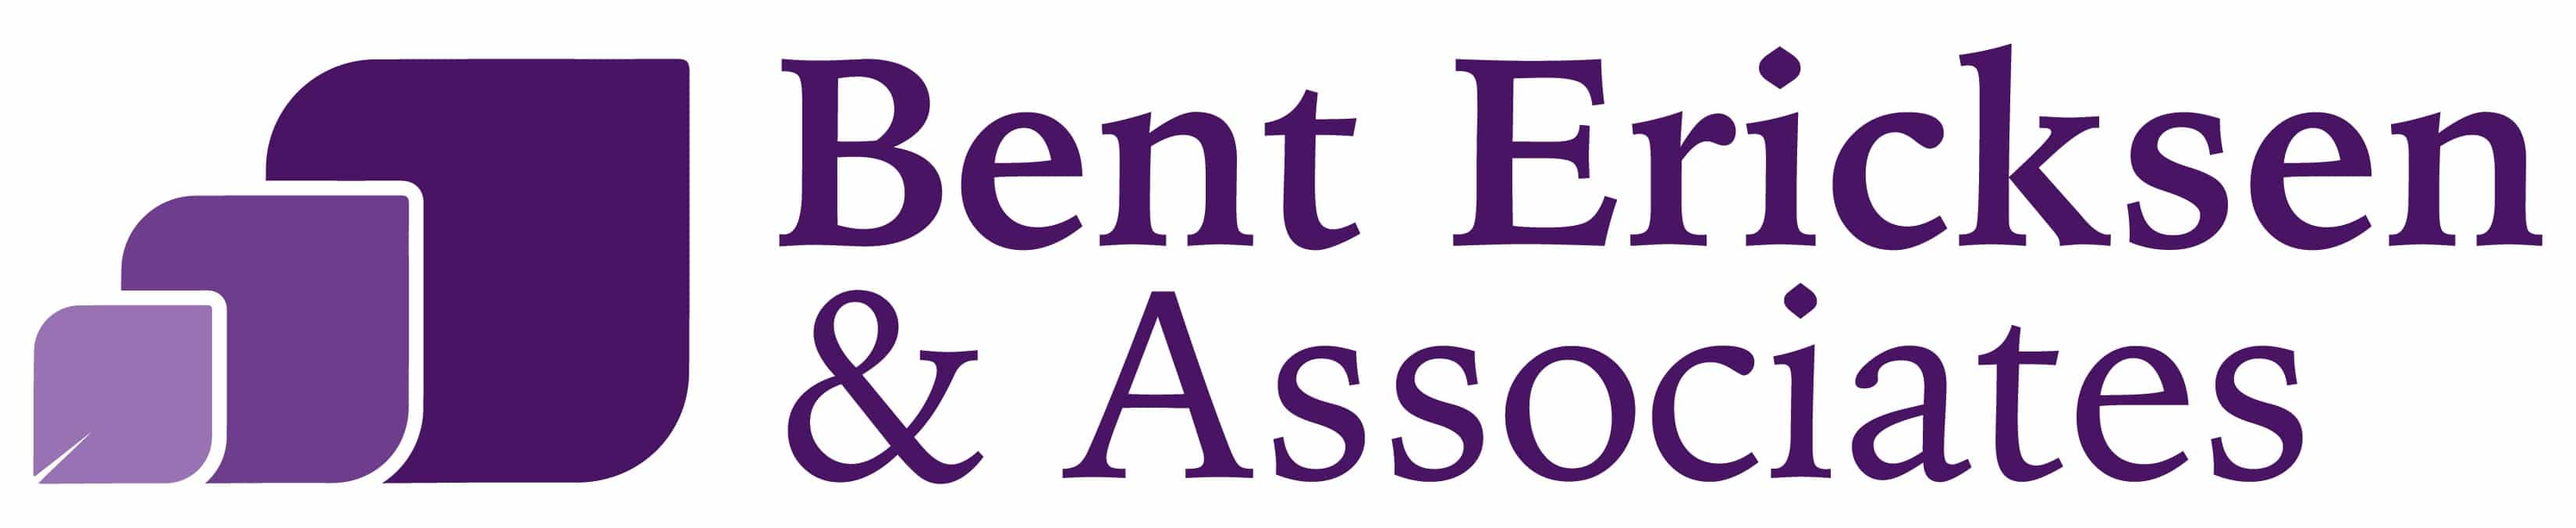 Bent Ericksen Associates Logo 1, All-Star Dental Academy